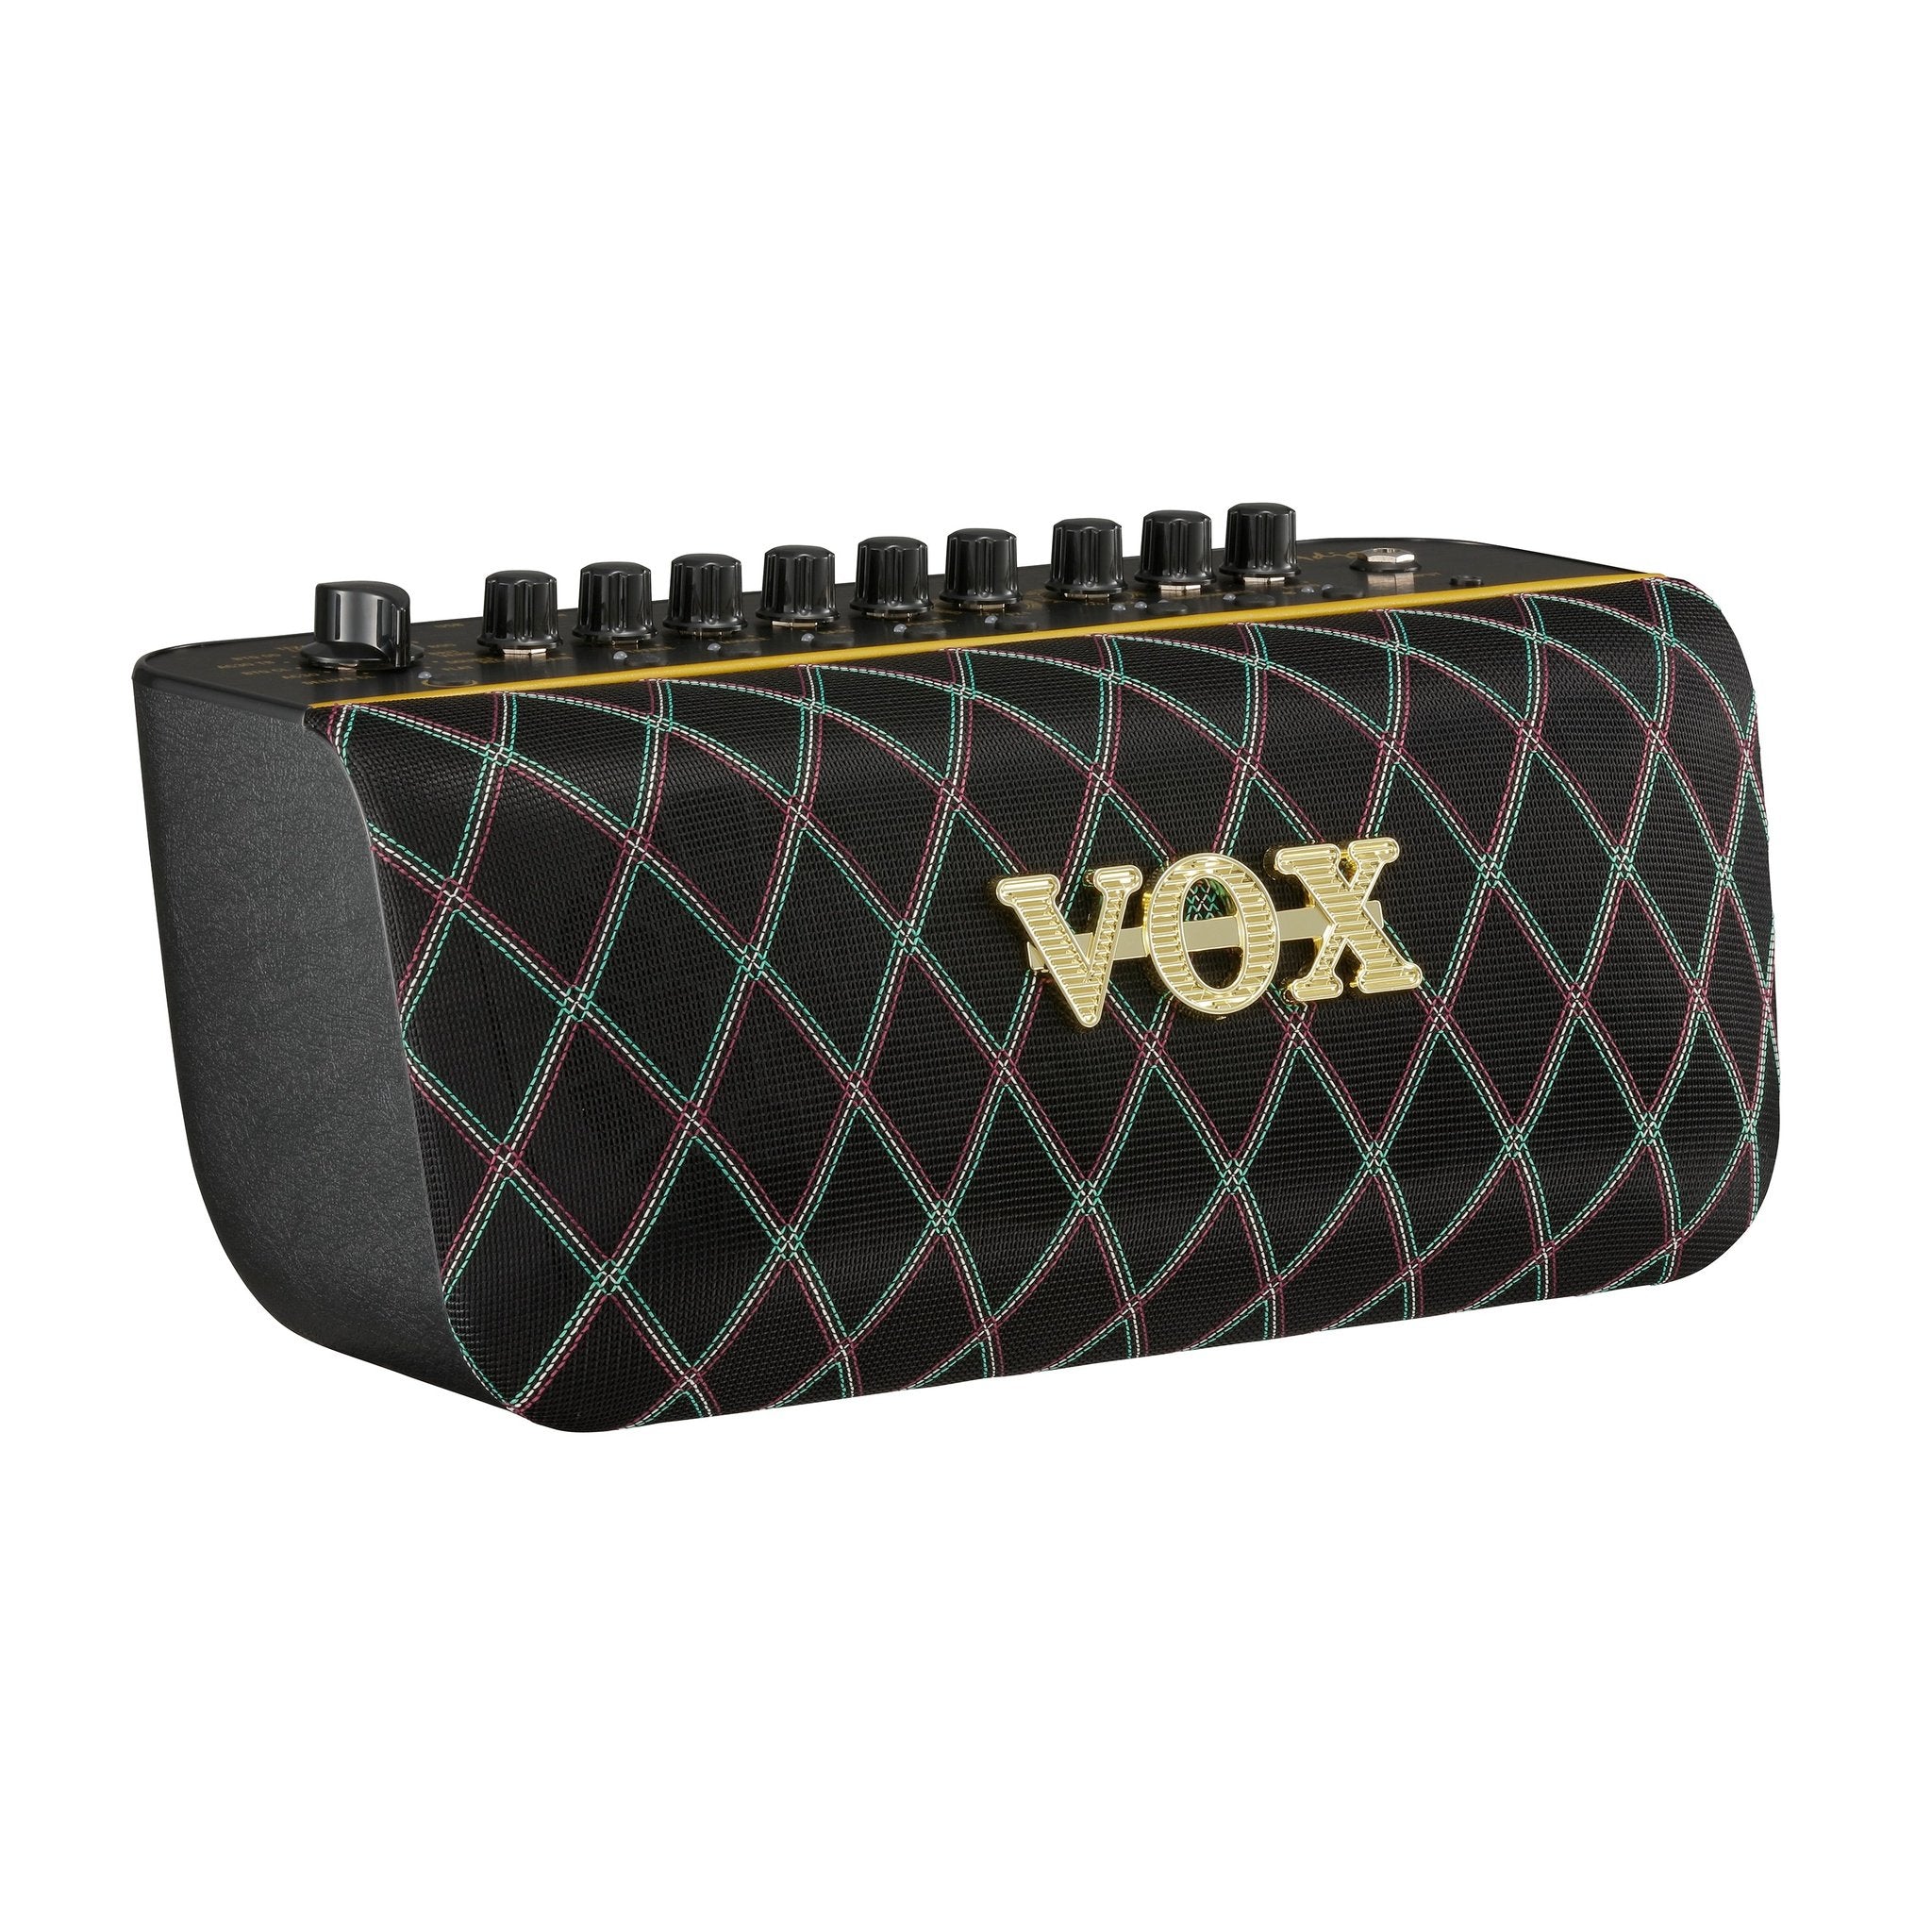 Vox Adio Air Guitar Amp w/Bluetooth 2